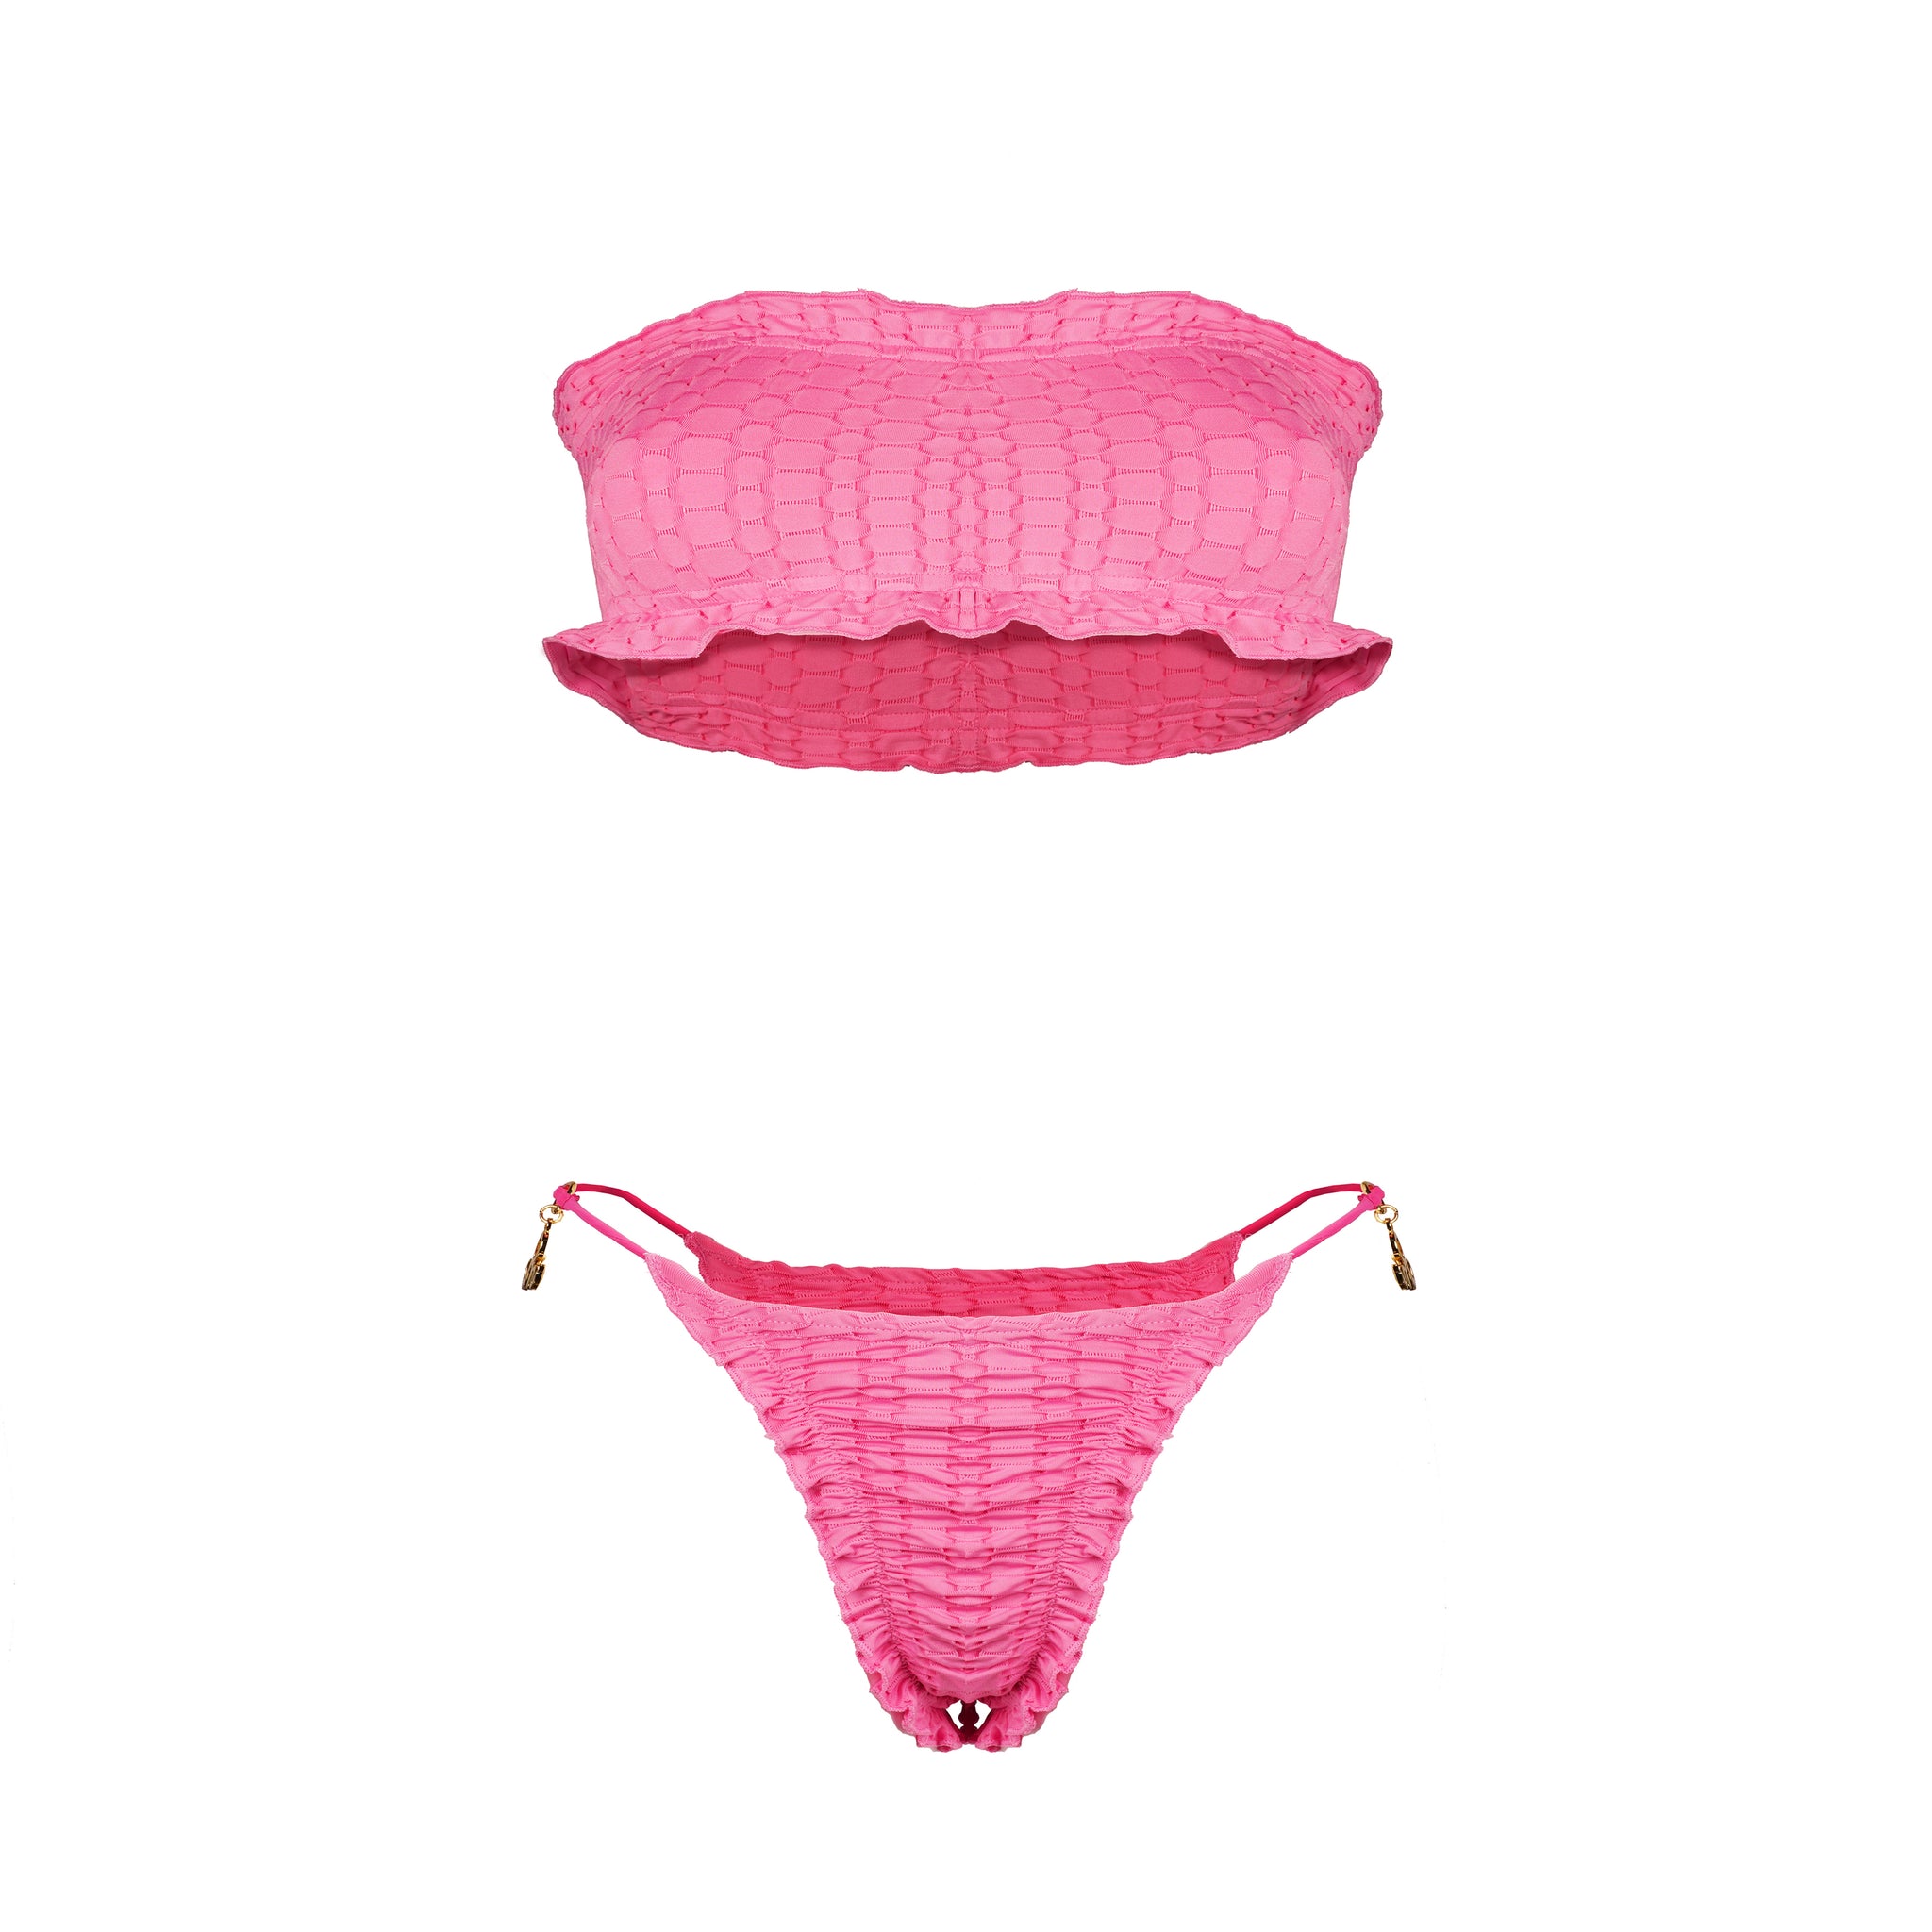 30%OFF Pink Three Piece Bikini Set With Skirt